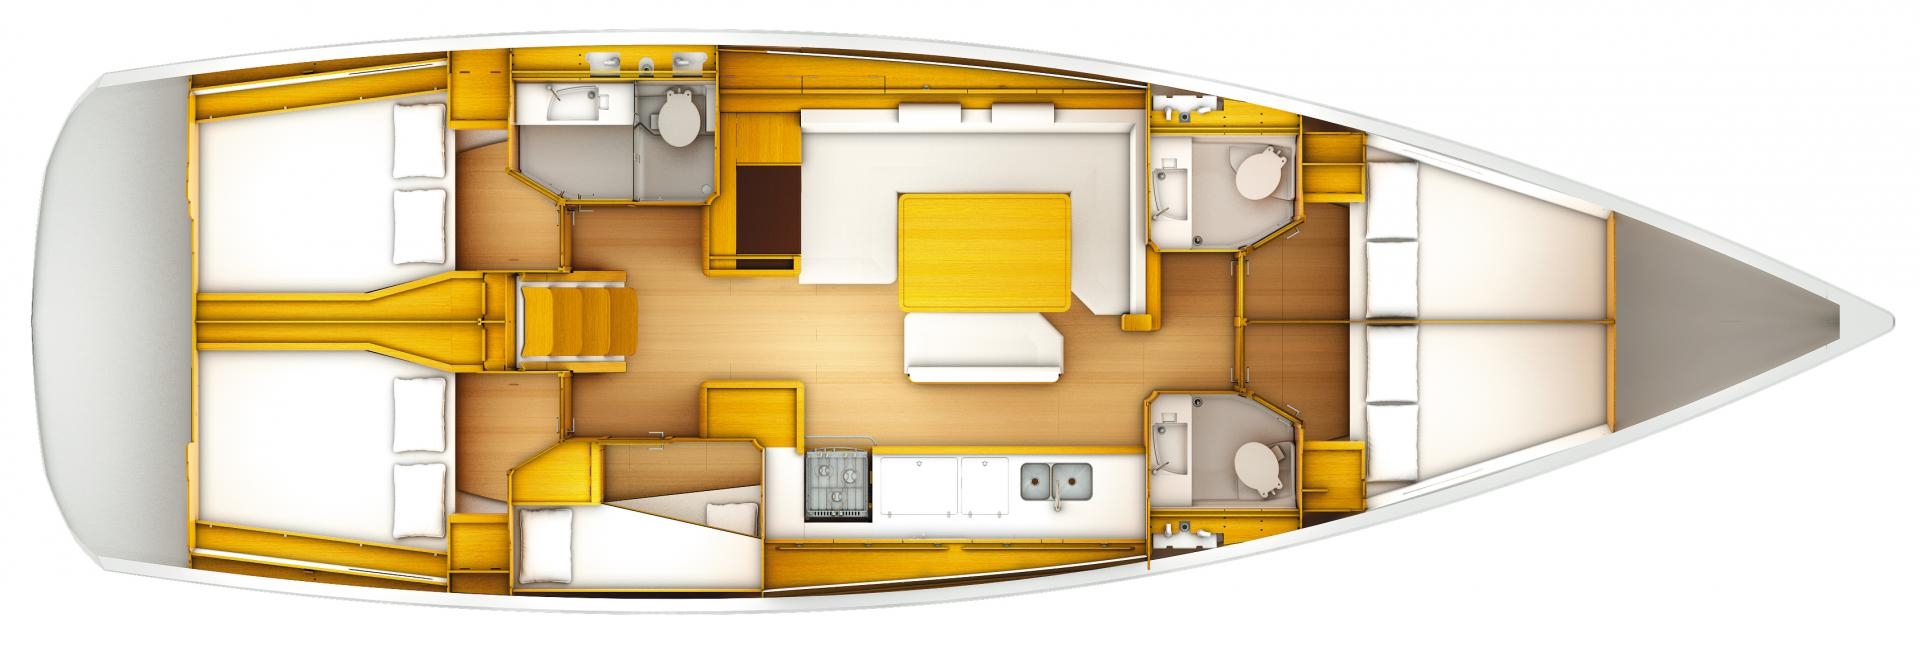 Floor plan image for yacht Sun Odyssey 509 - CALIA III